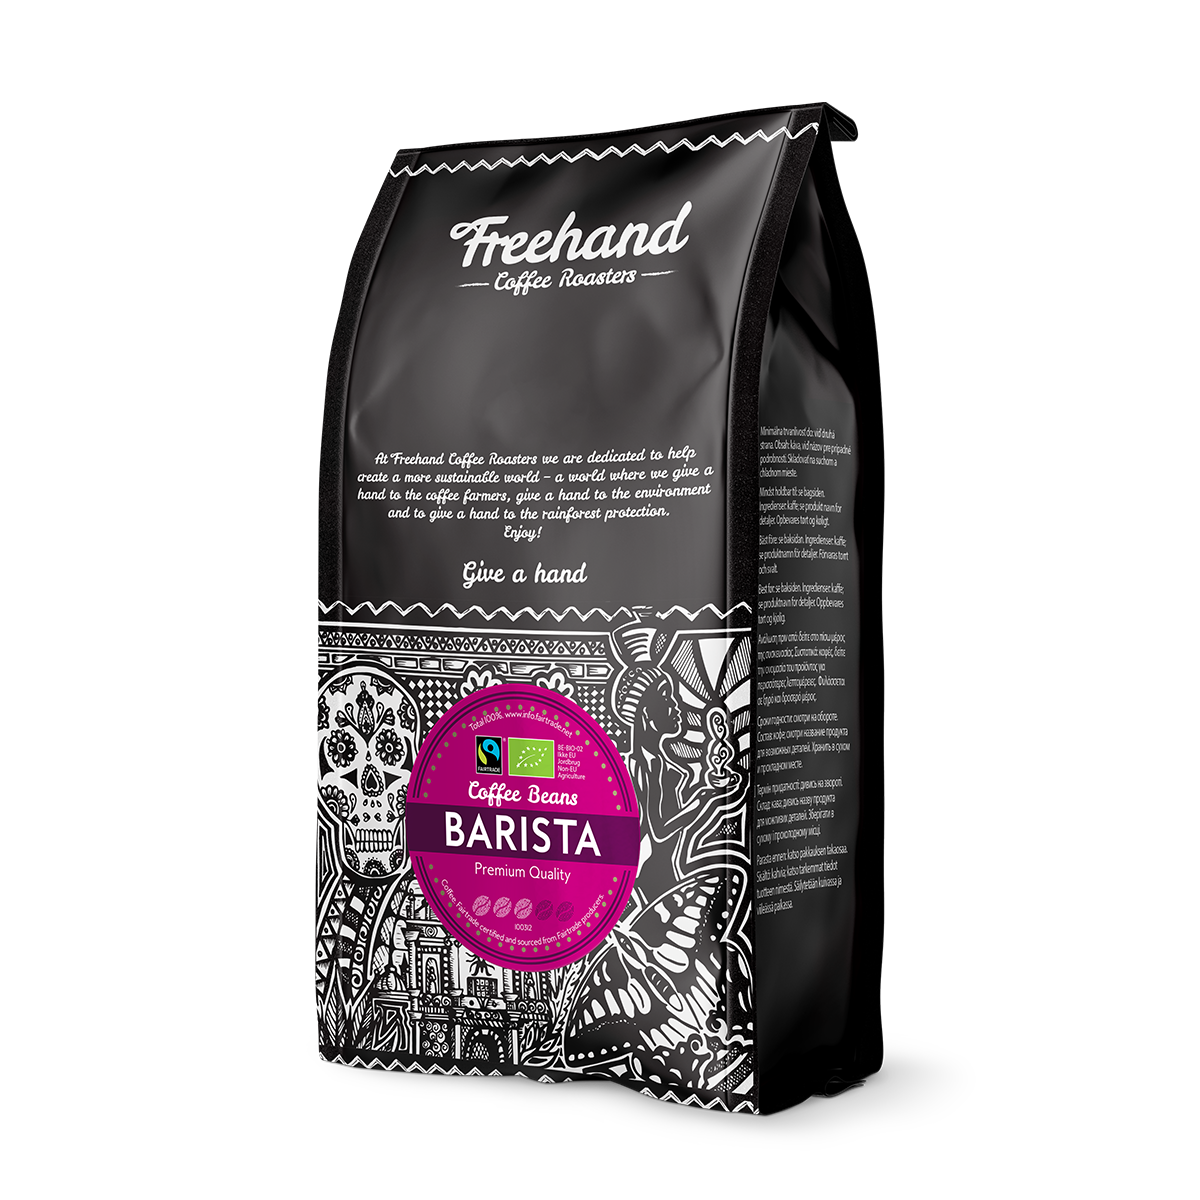 Freehand Barista kaffebønner er en mørkristet kaffeblanding